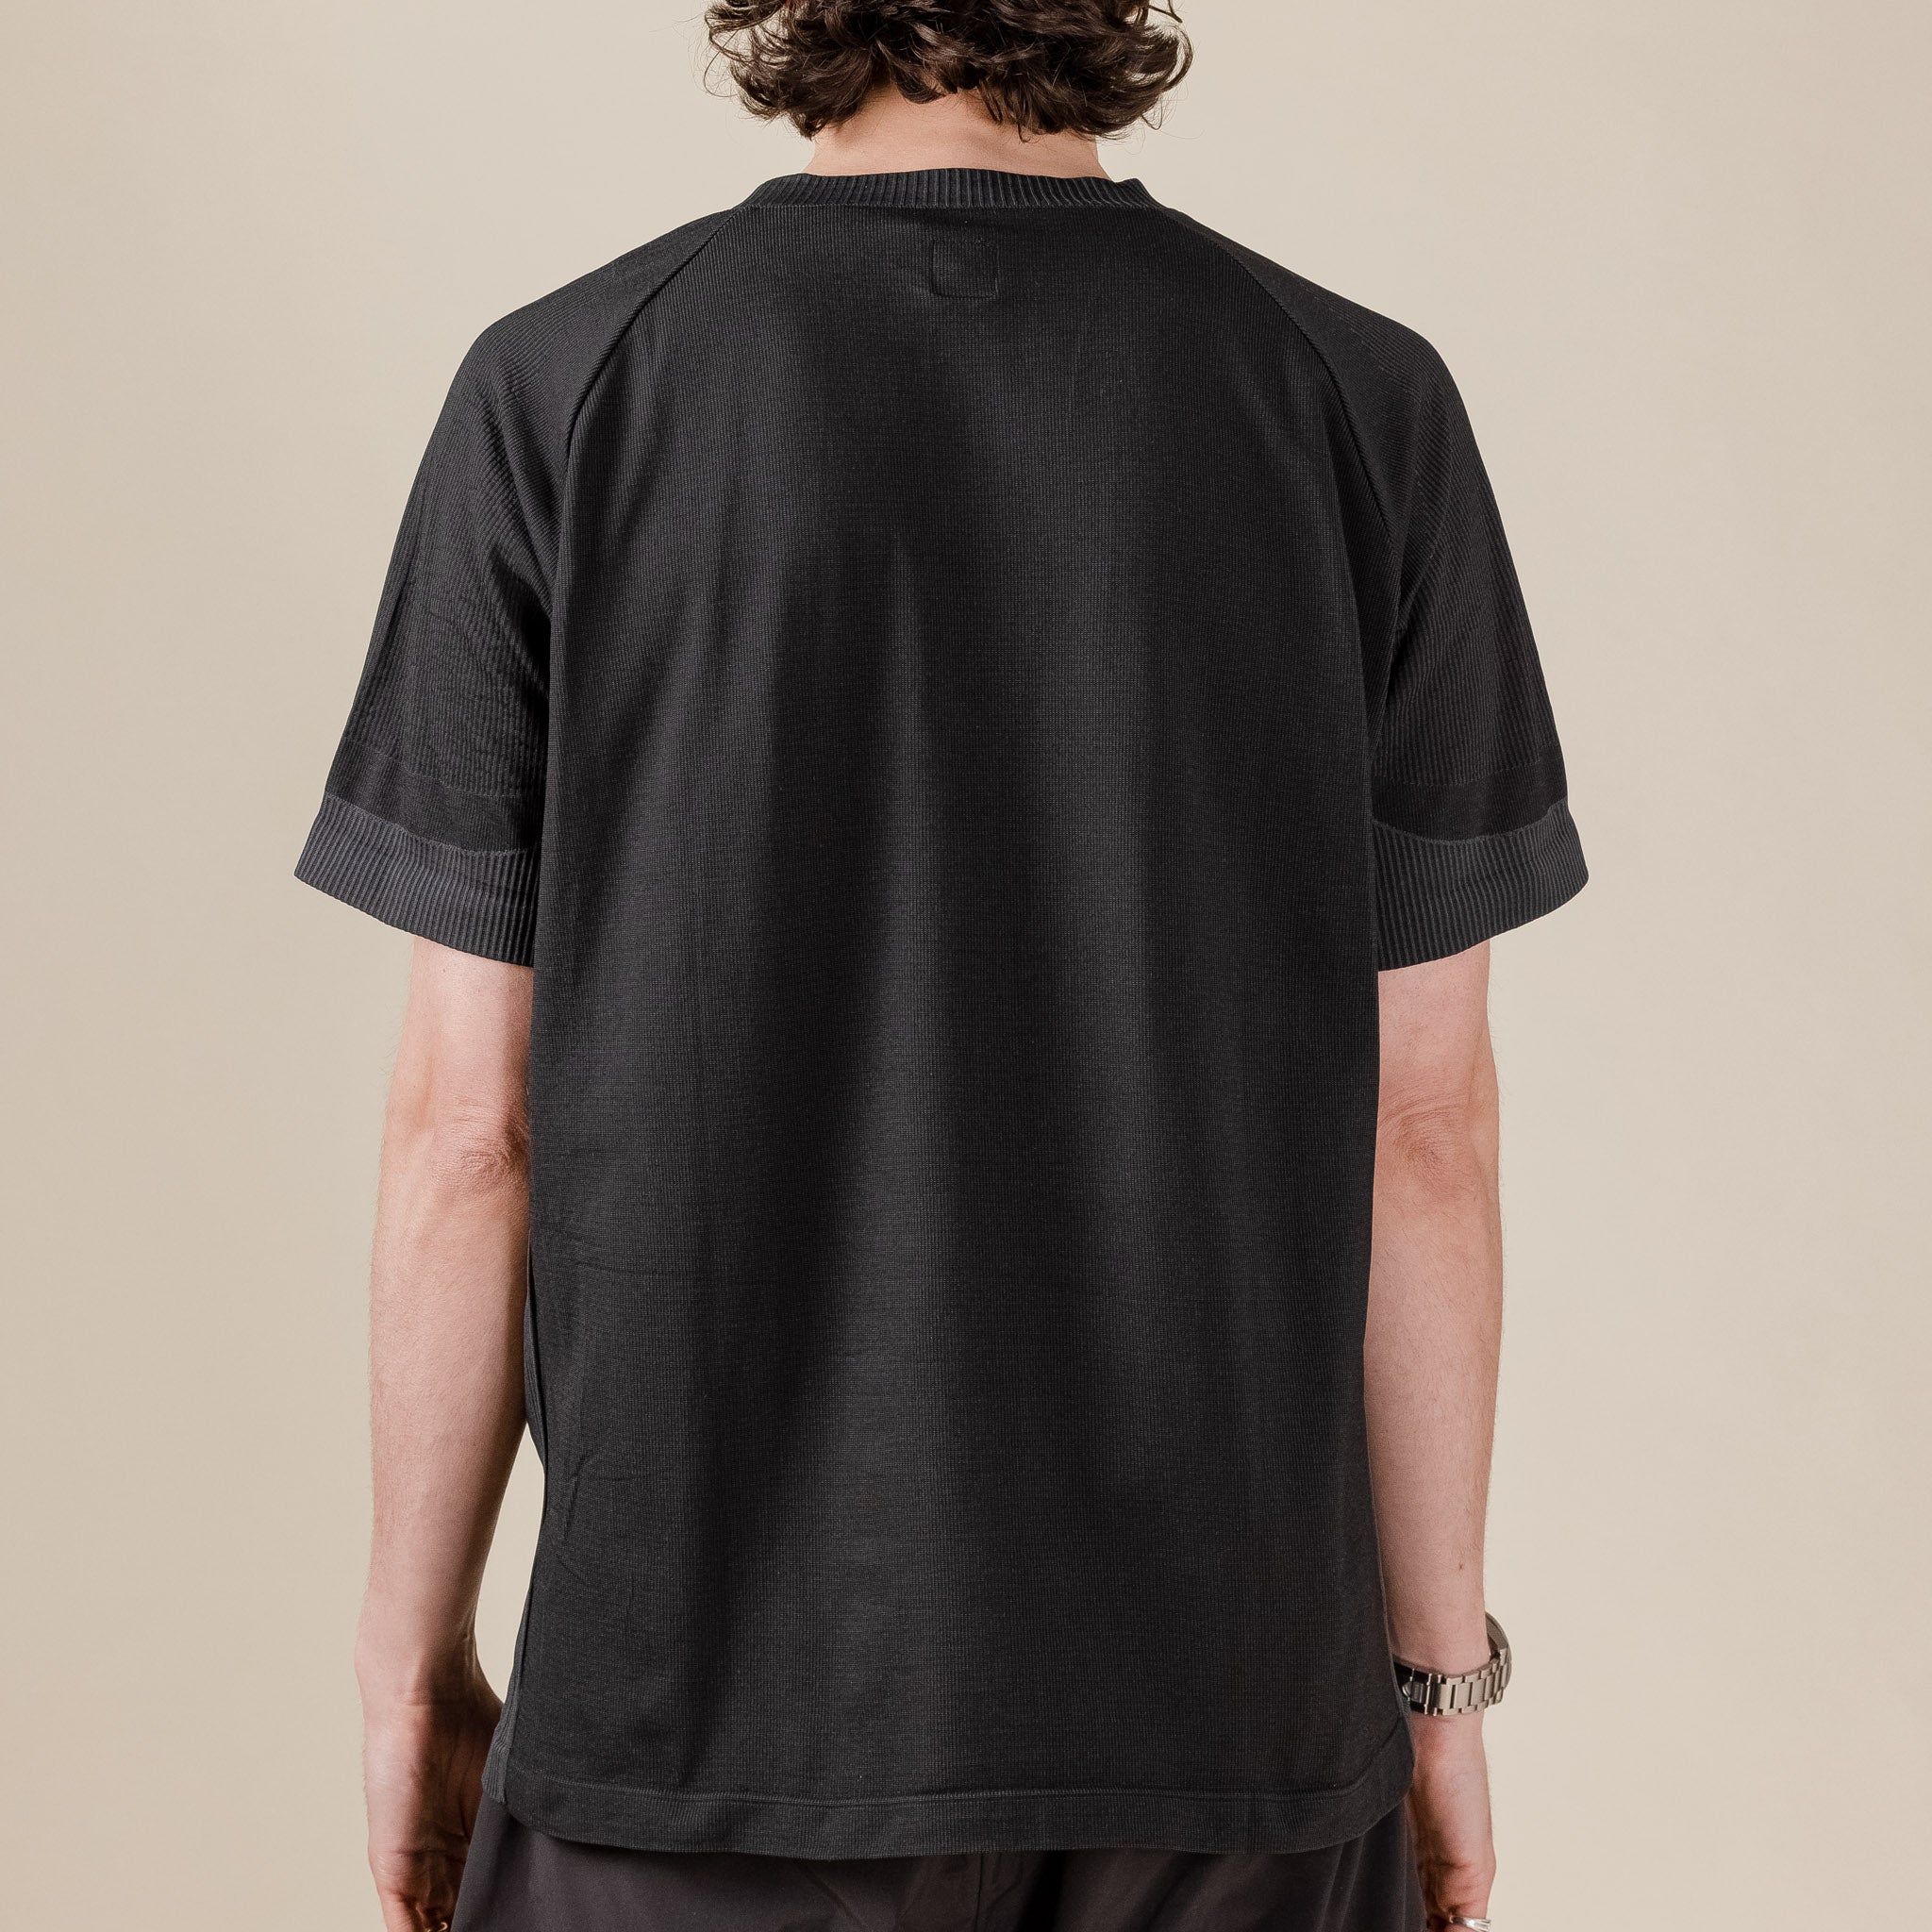 J.L-A.L - Prima Tech Knitted T-Shirt - Black / Grey